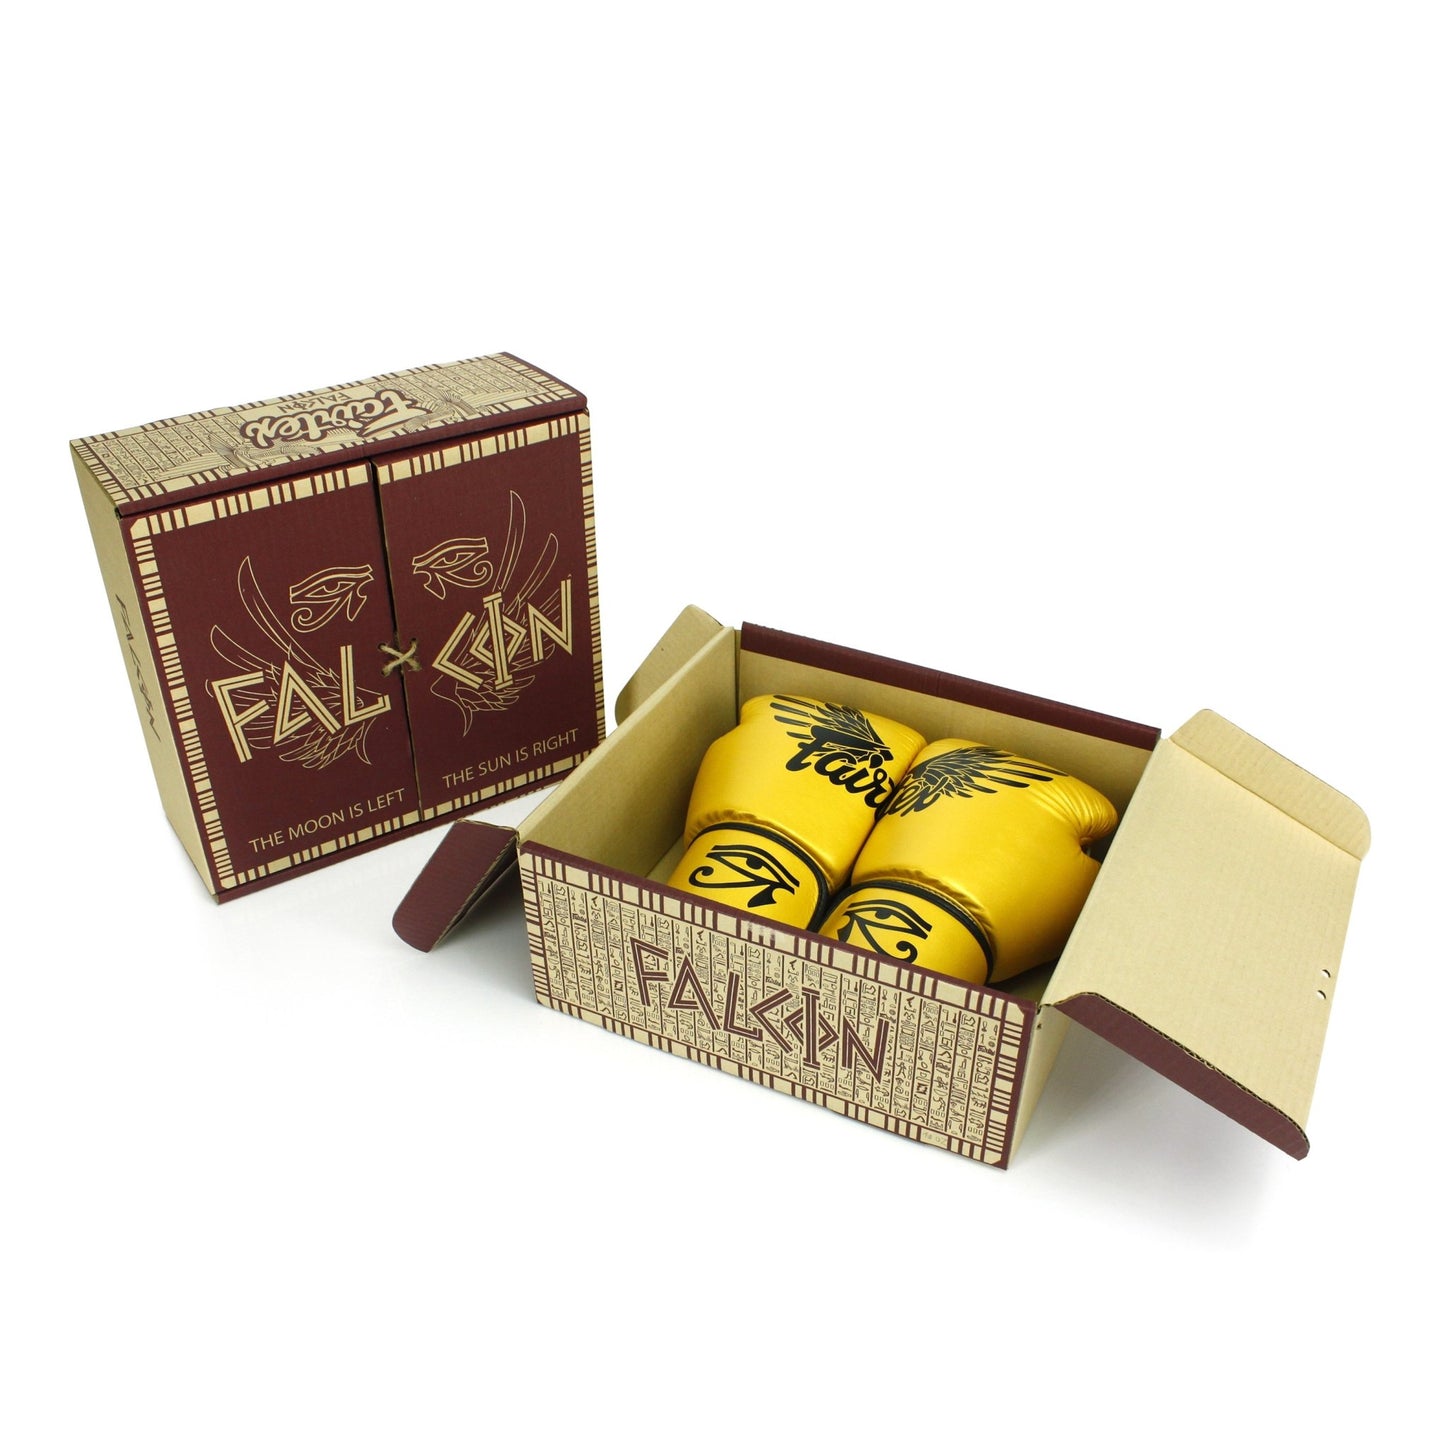 Fairtex Boxing Gloves BGV1 "Falcon" Limited Edition - SUPER EXPORT SHOP